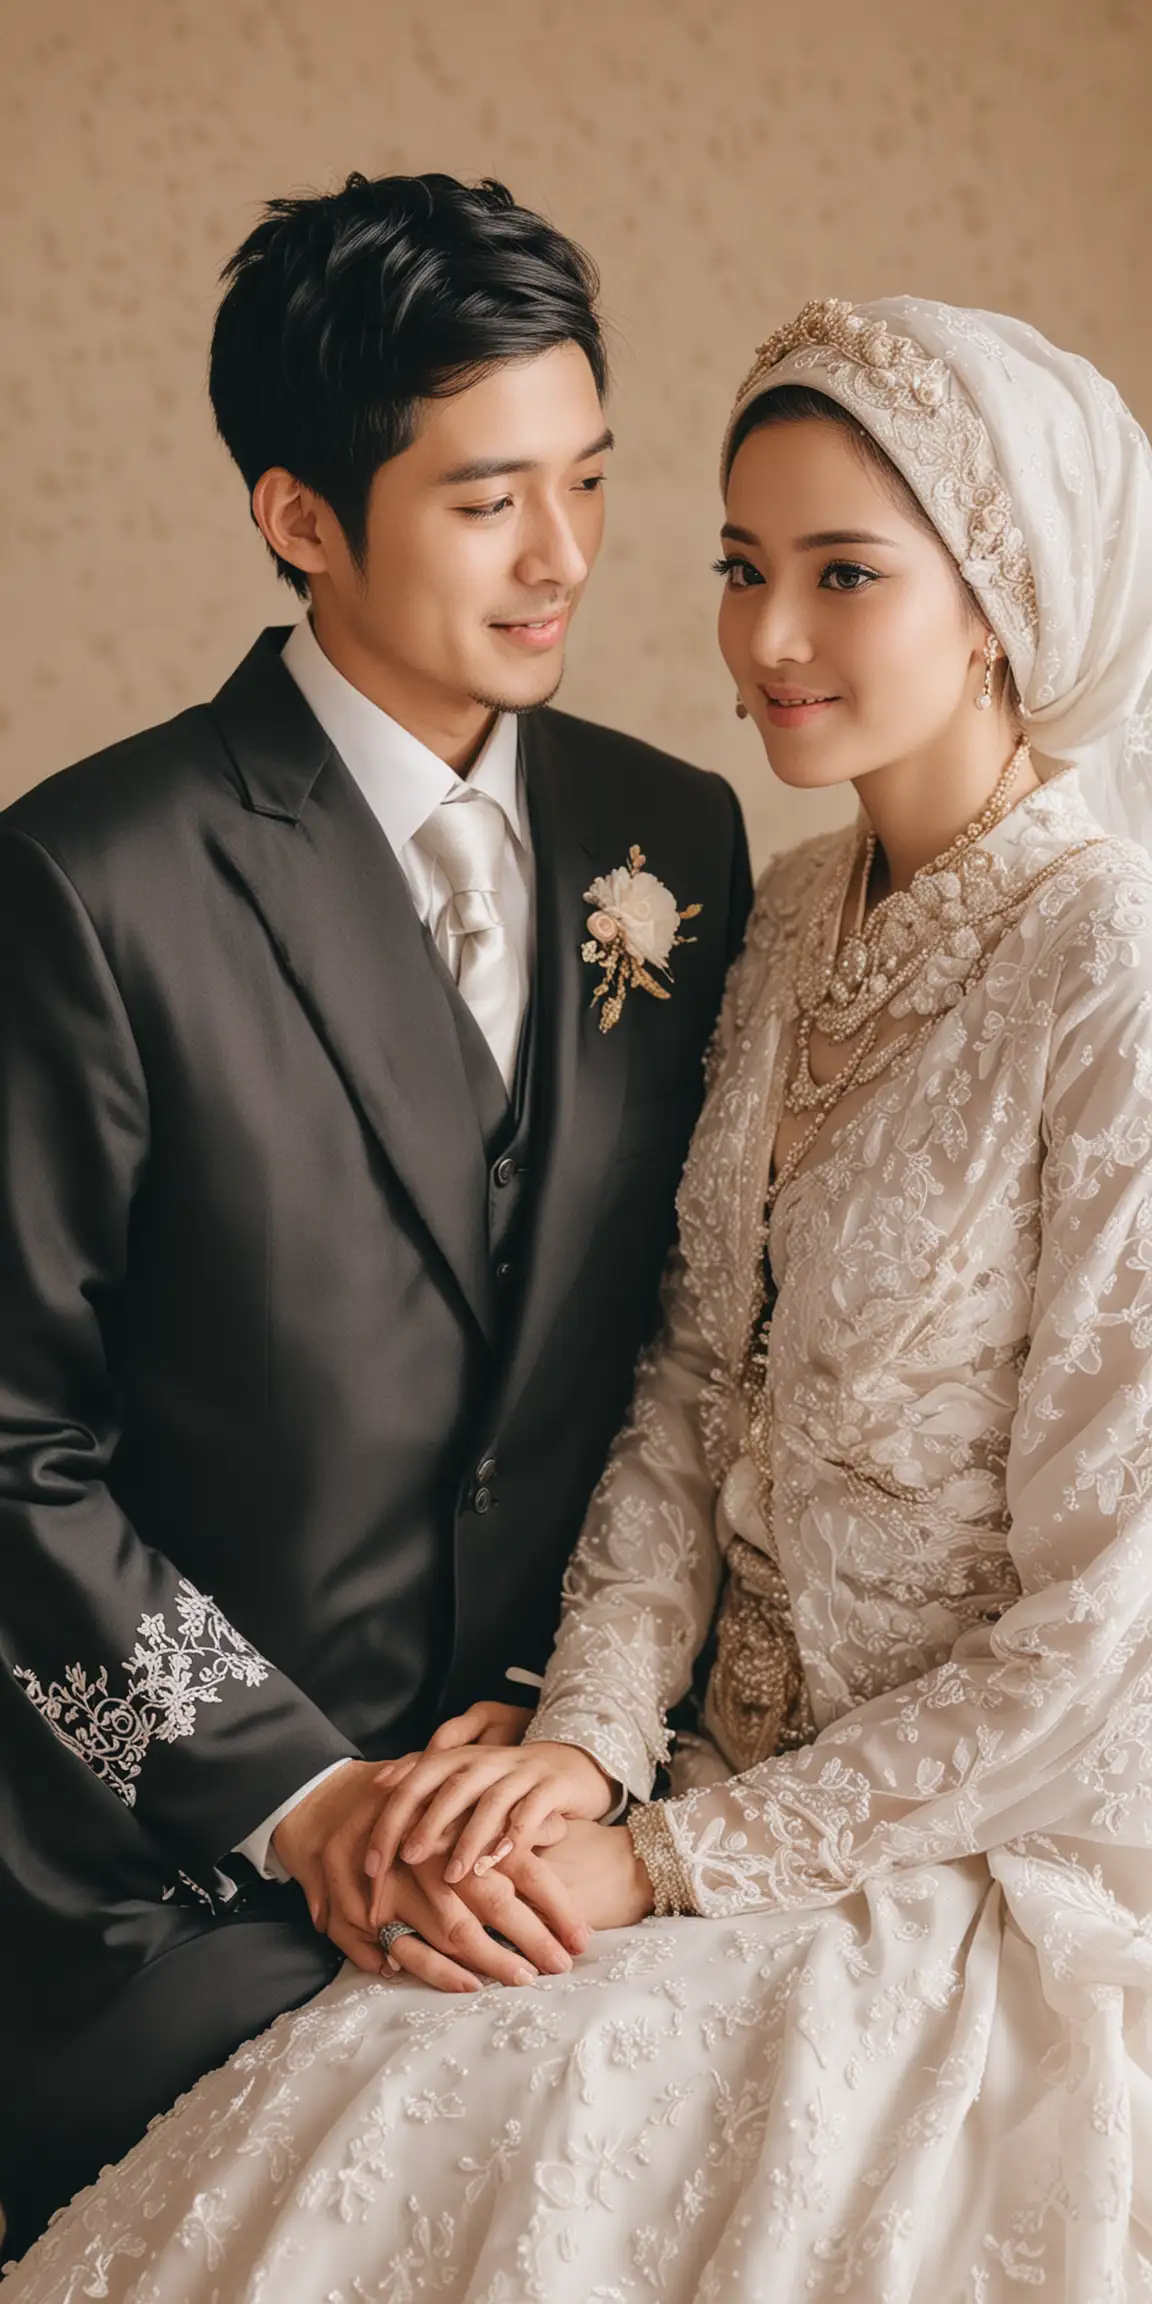 Hijabi Bride and Japanese Groom Wedding Portrait